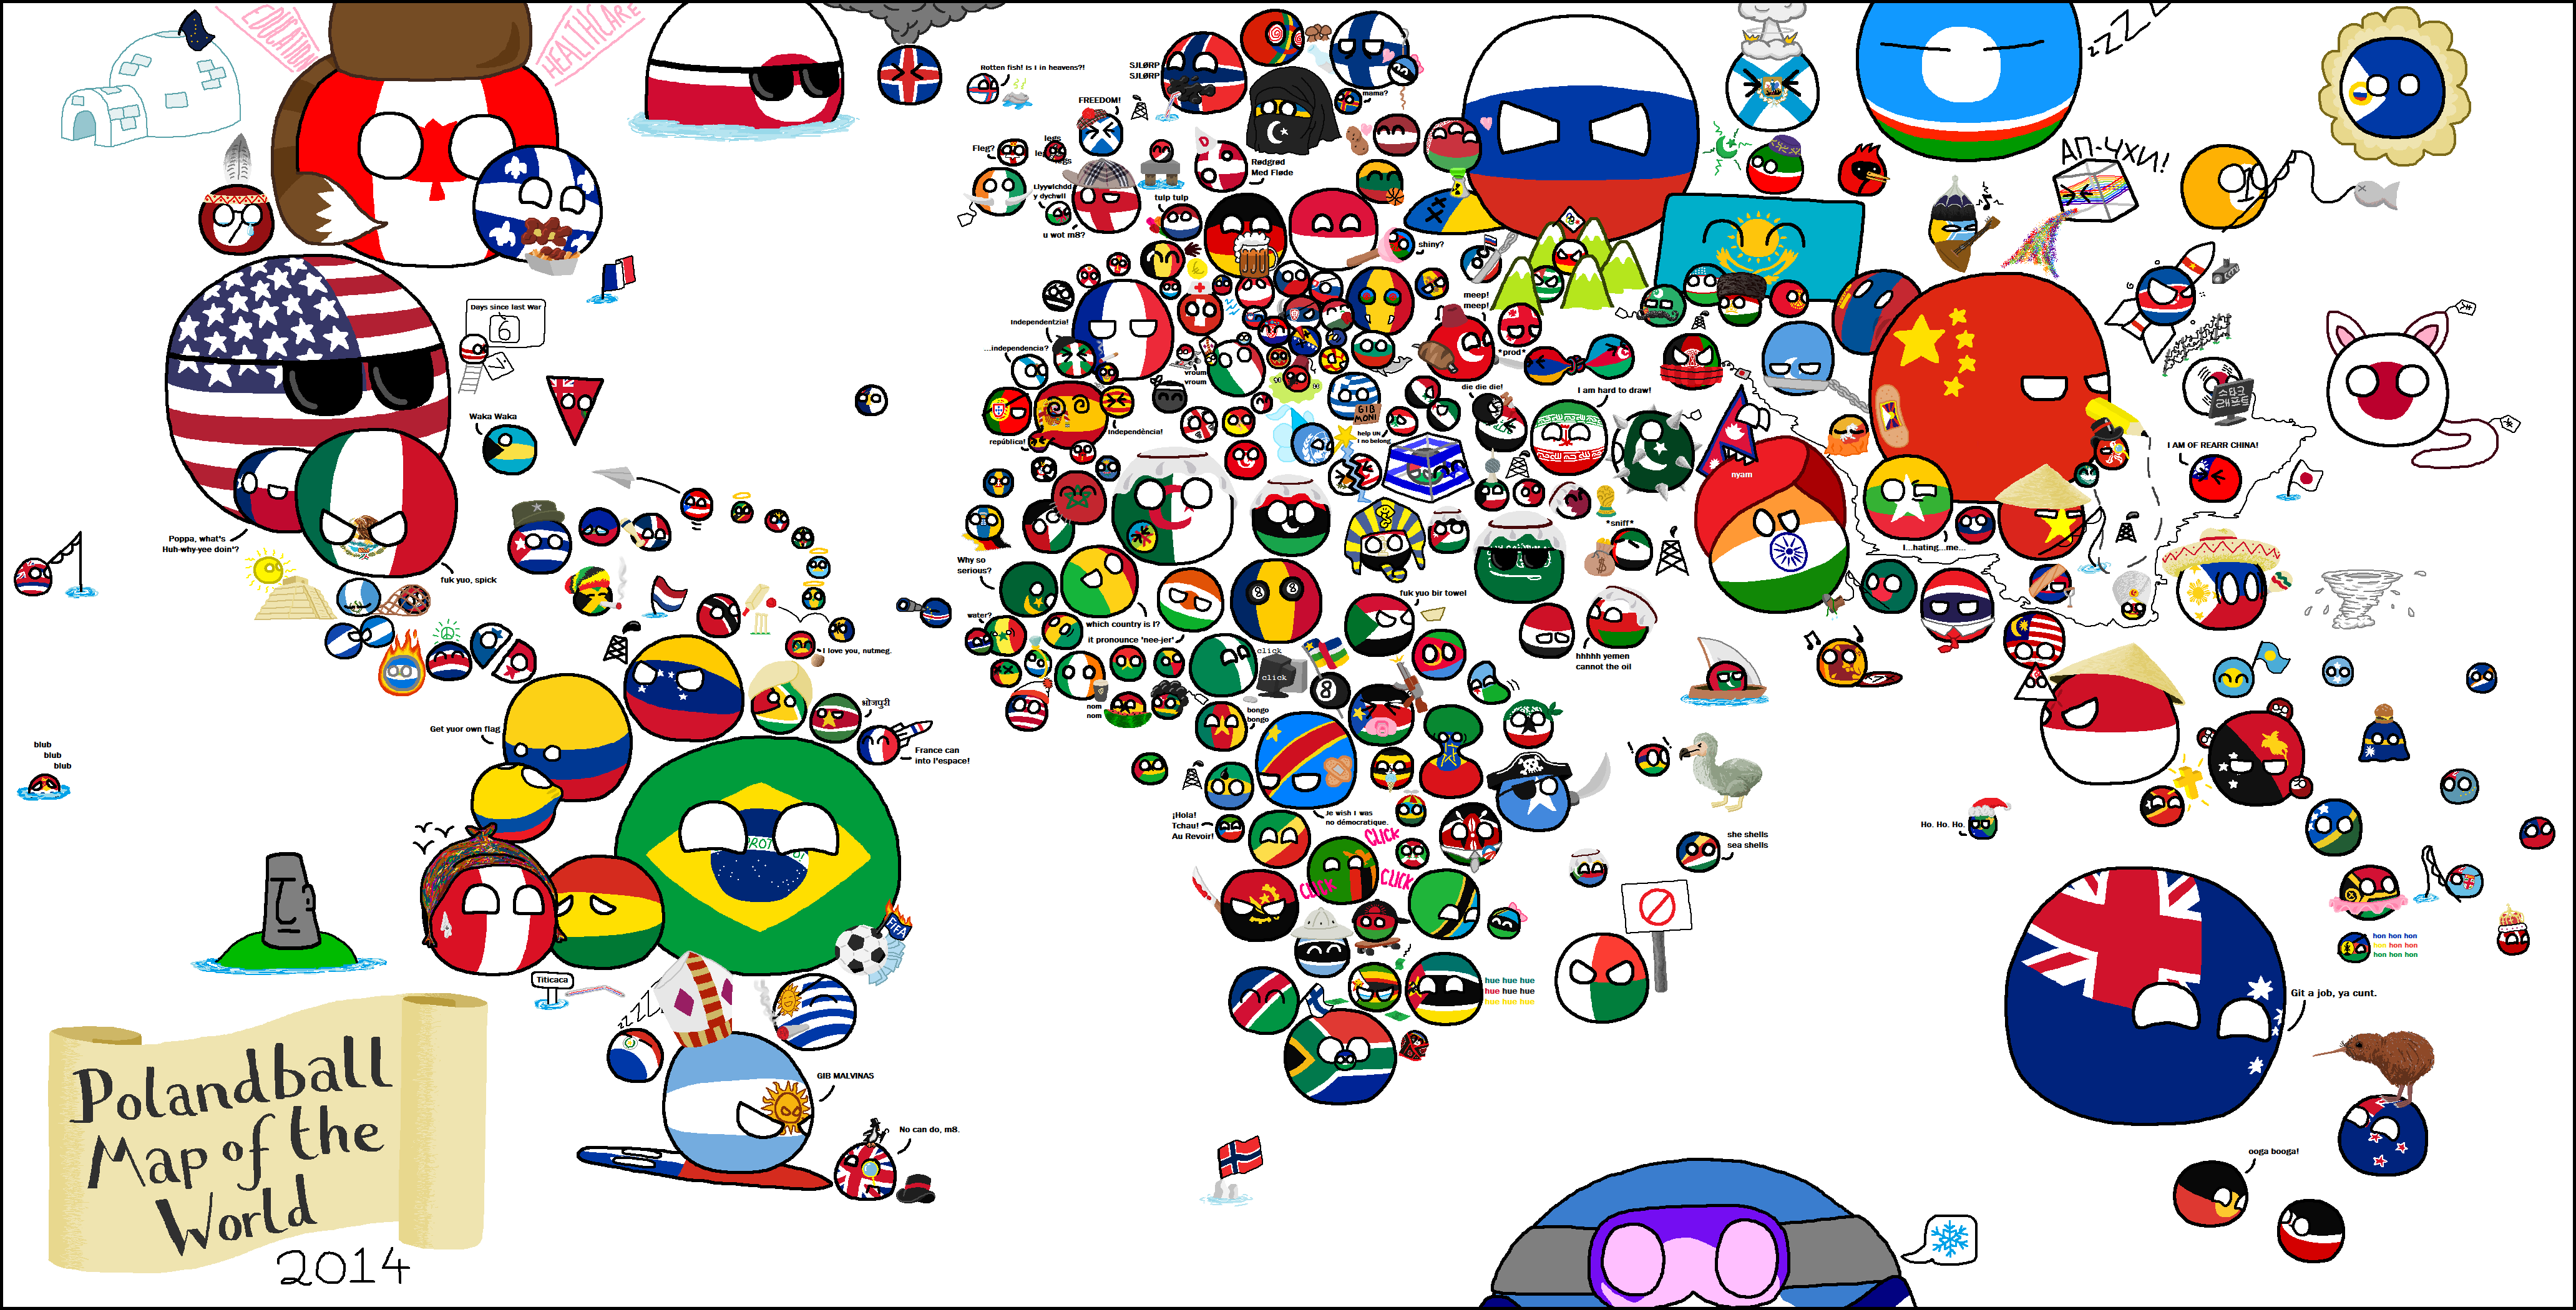 Polandball Map of the World 2014